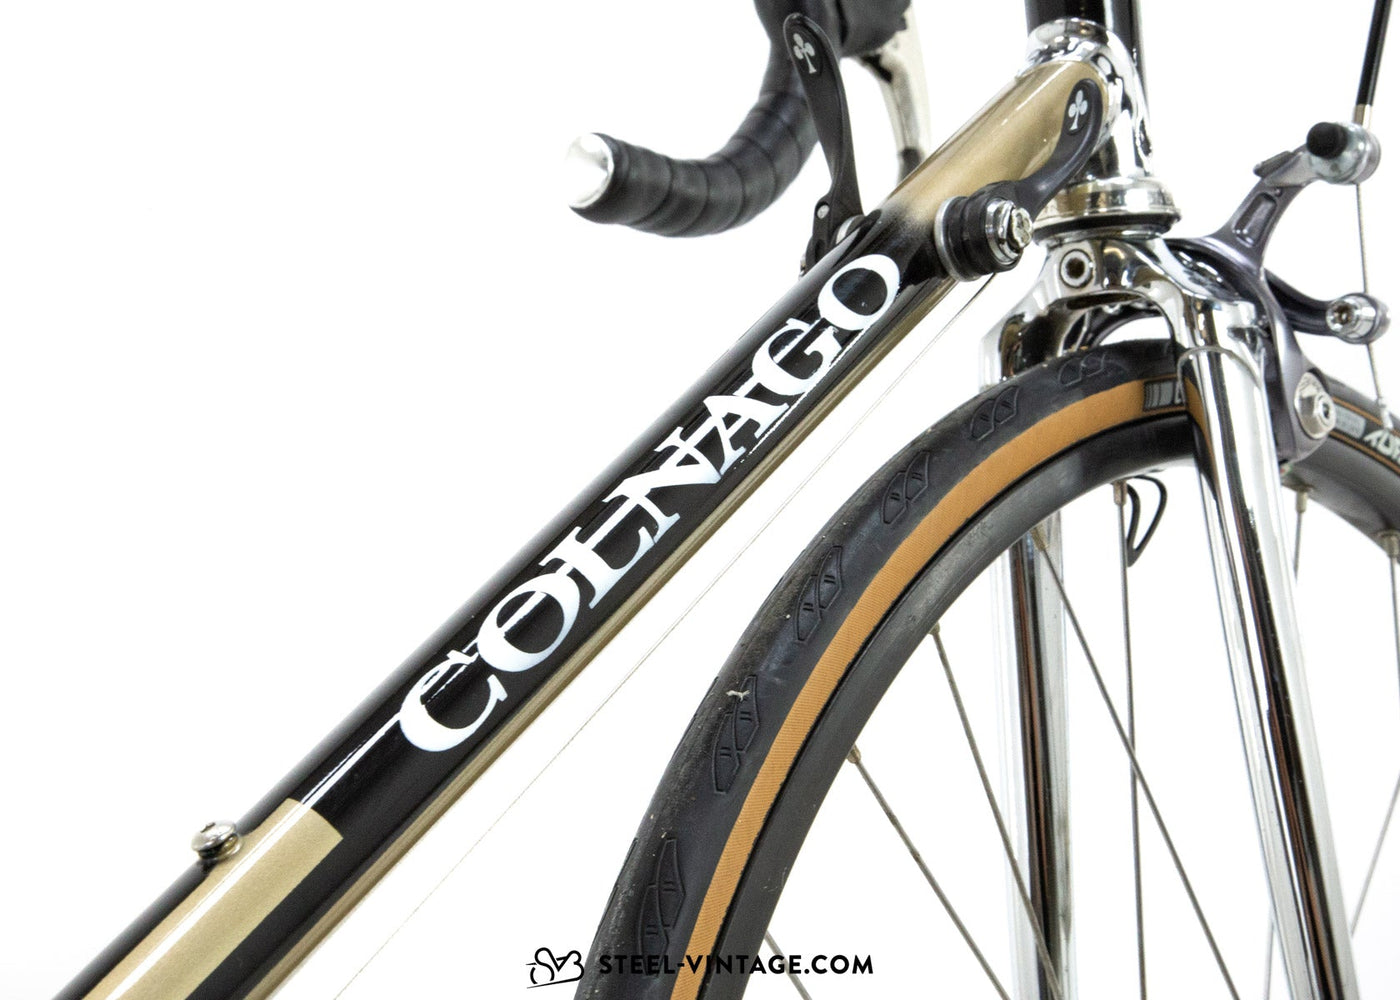 Colnago Superissimo SL Road Bicycle 1990s - Steel Vintage Bikes